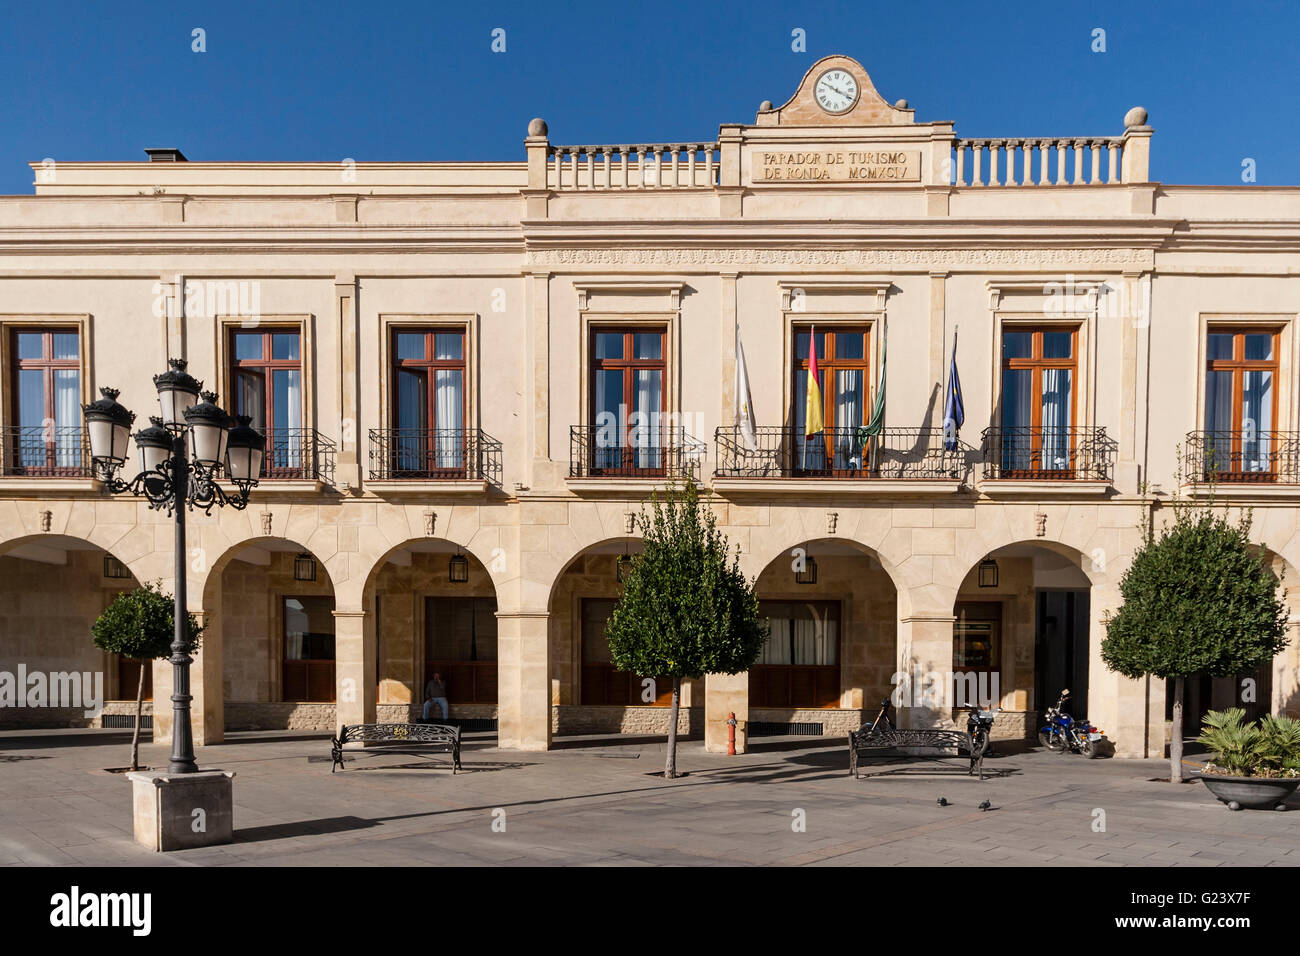 Le tourisme national Parador Hotel Ronda, Plaza de España, la province de Malaga, Espagne Banque D'Images